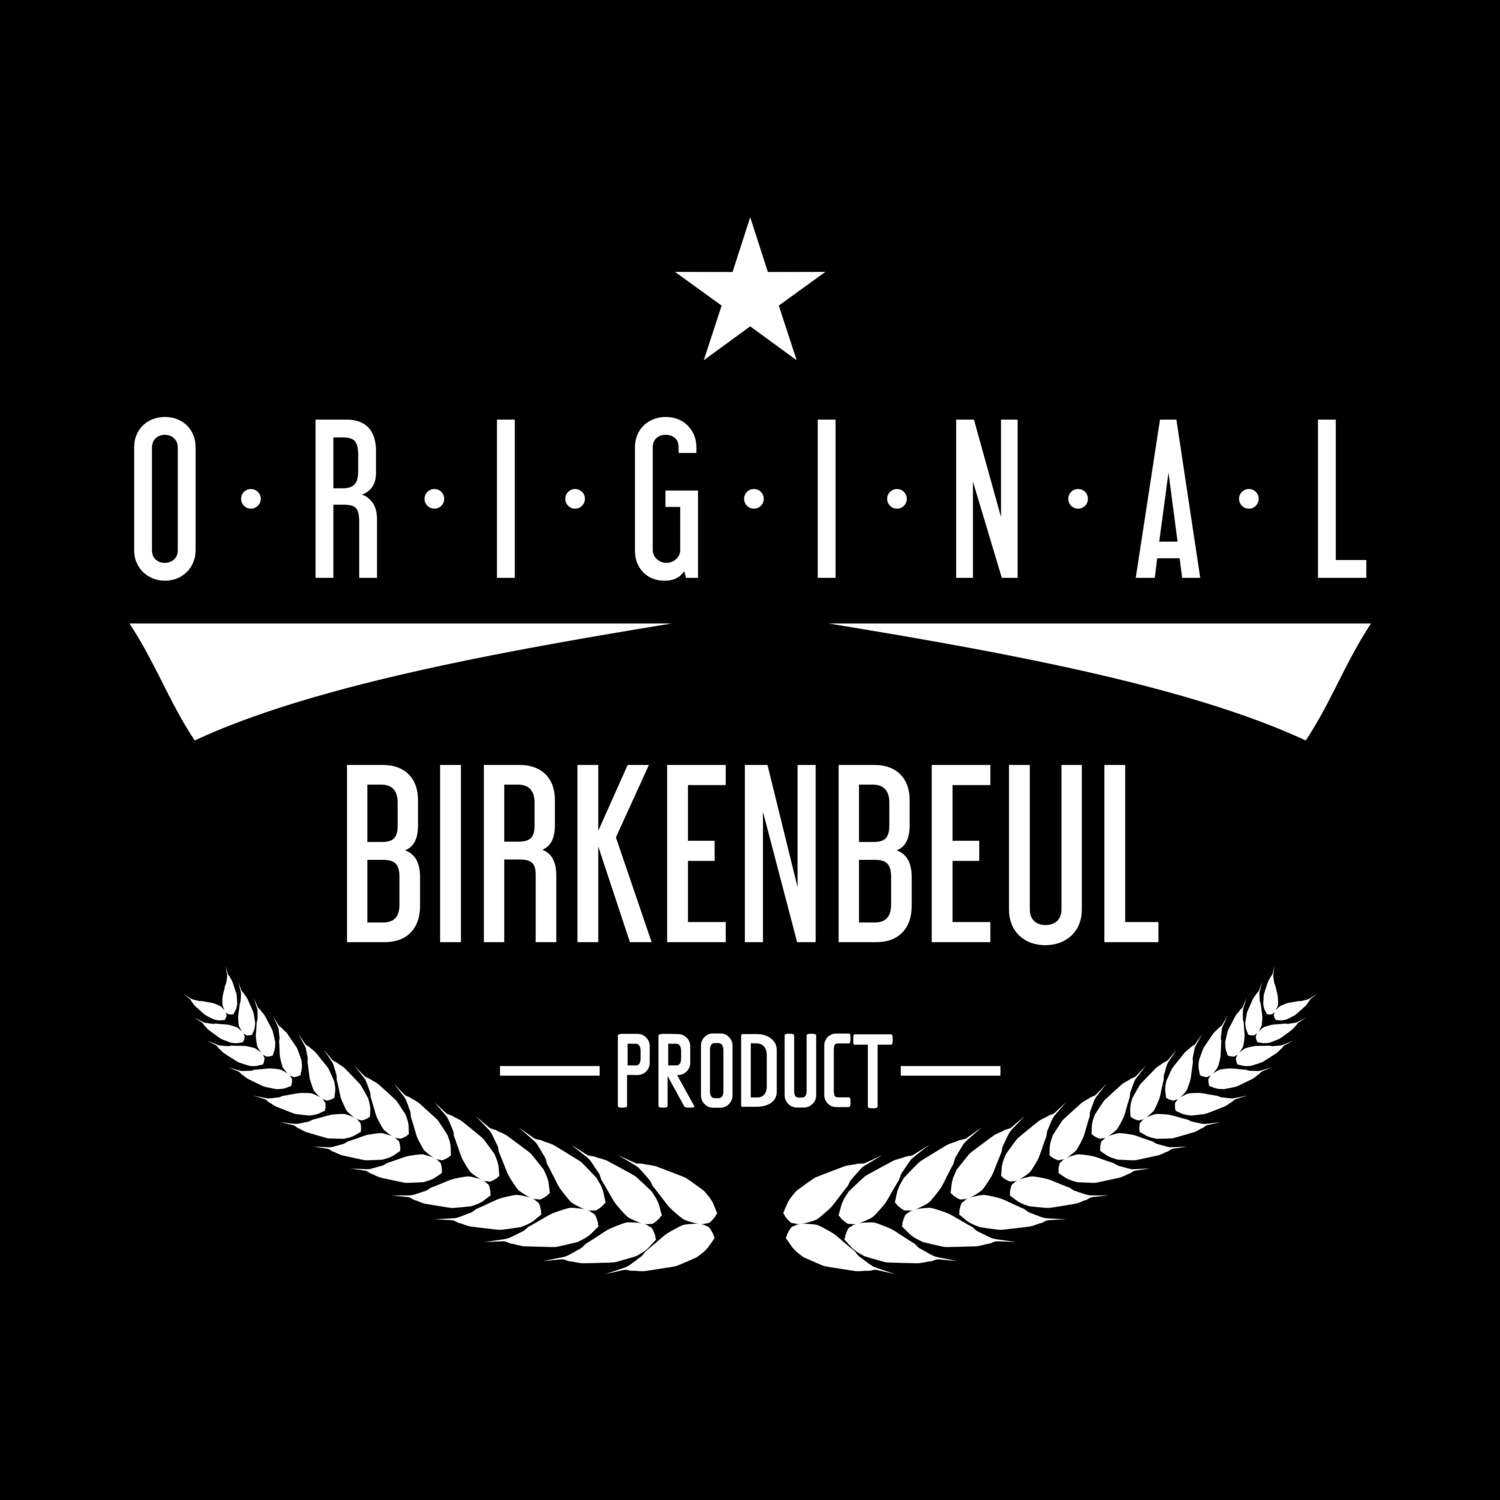 Birkenbeul T-Shirt »Original Product«